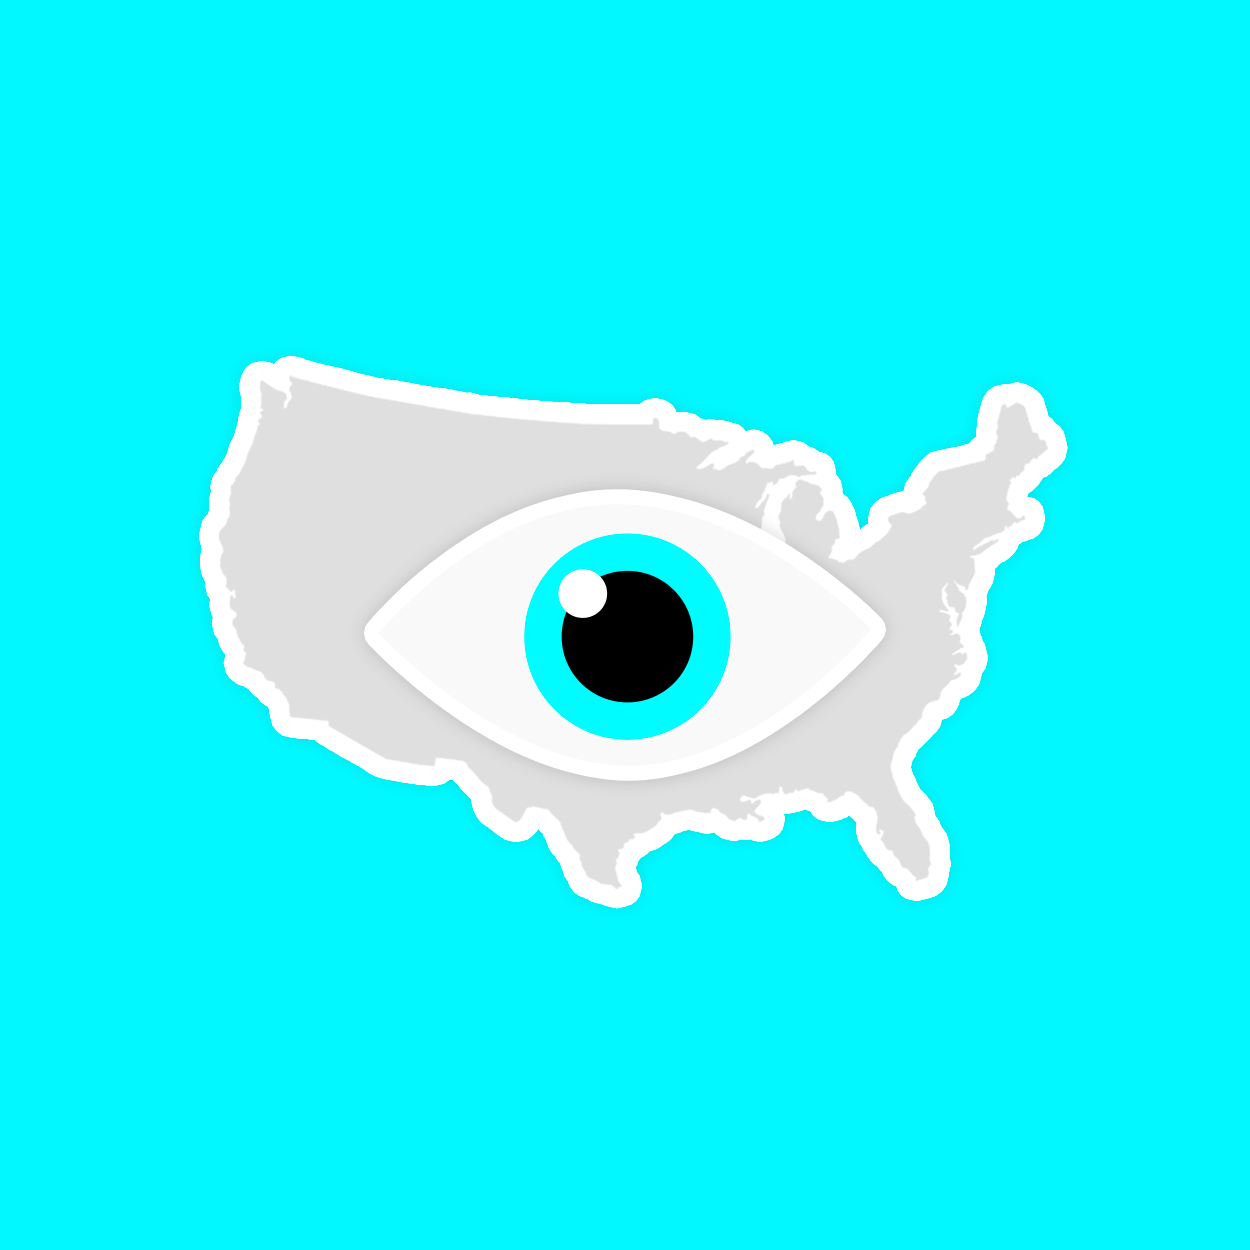 America’s Views on Surveillance Advertising